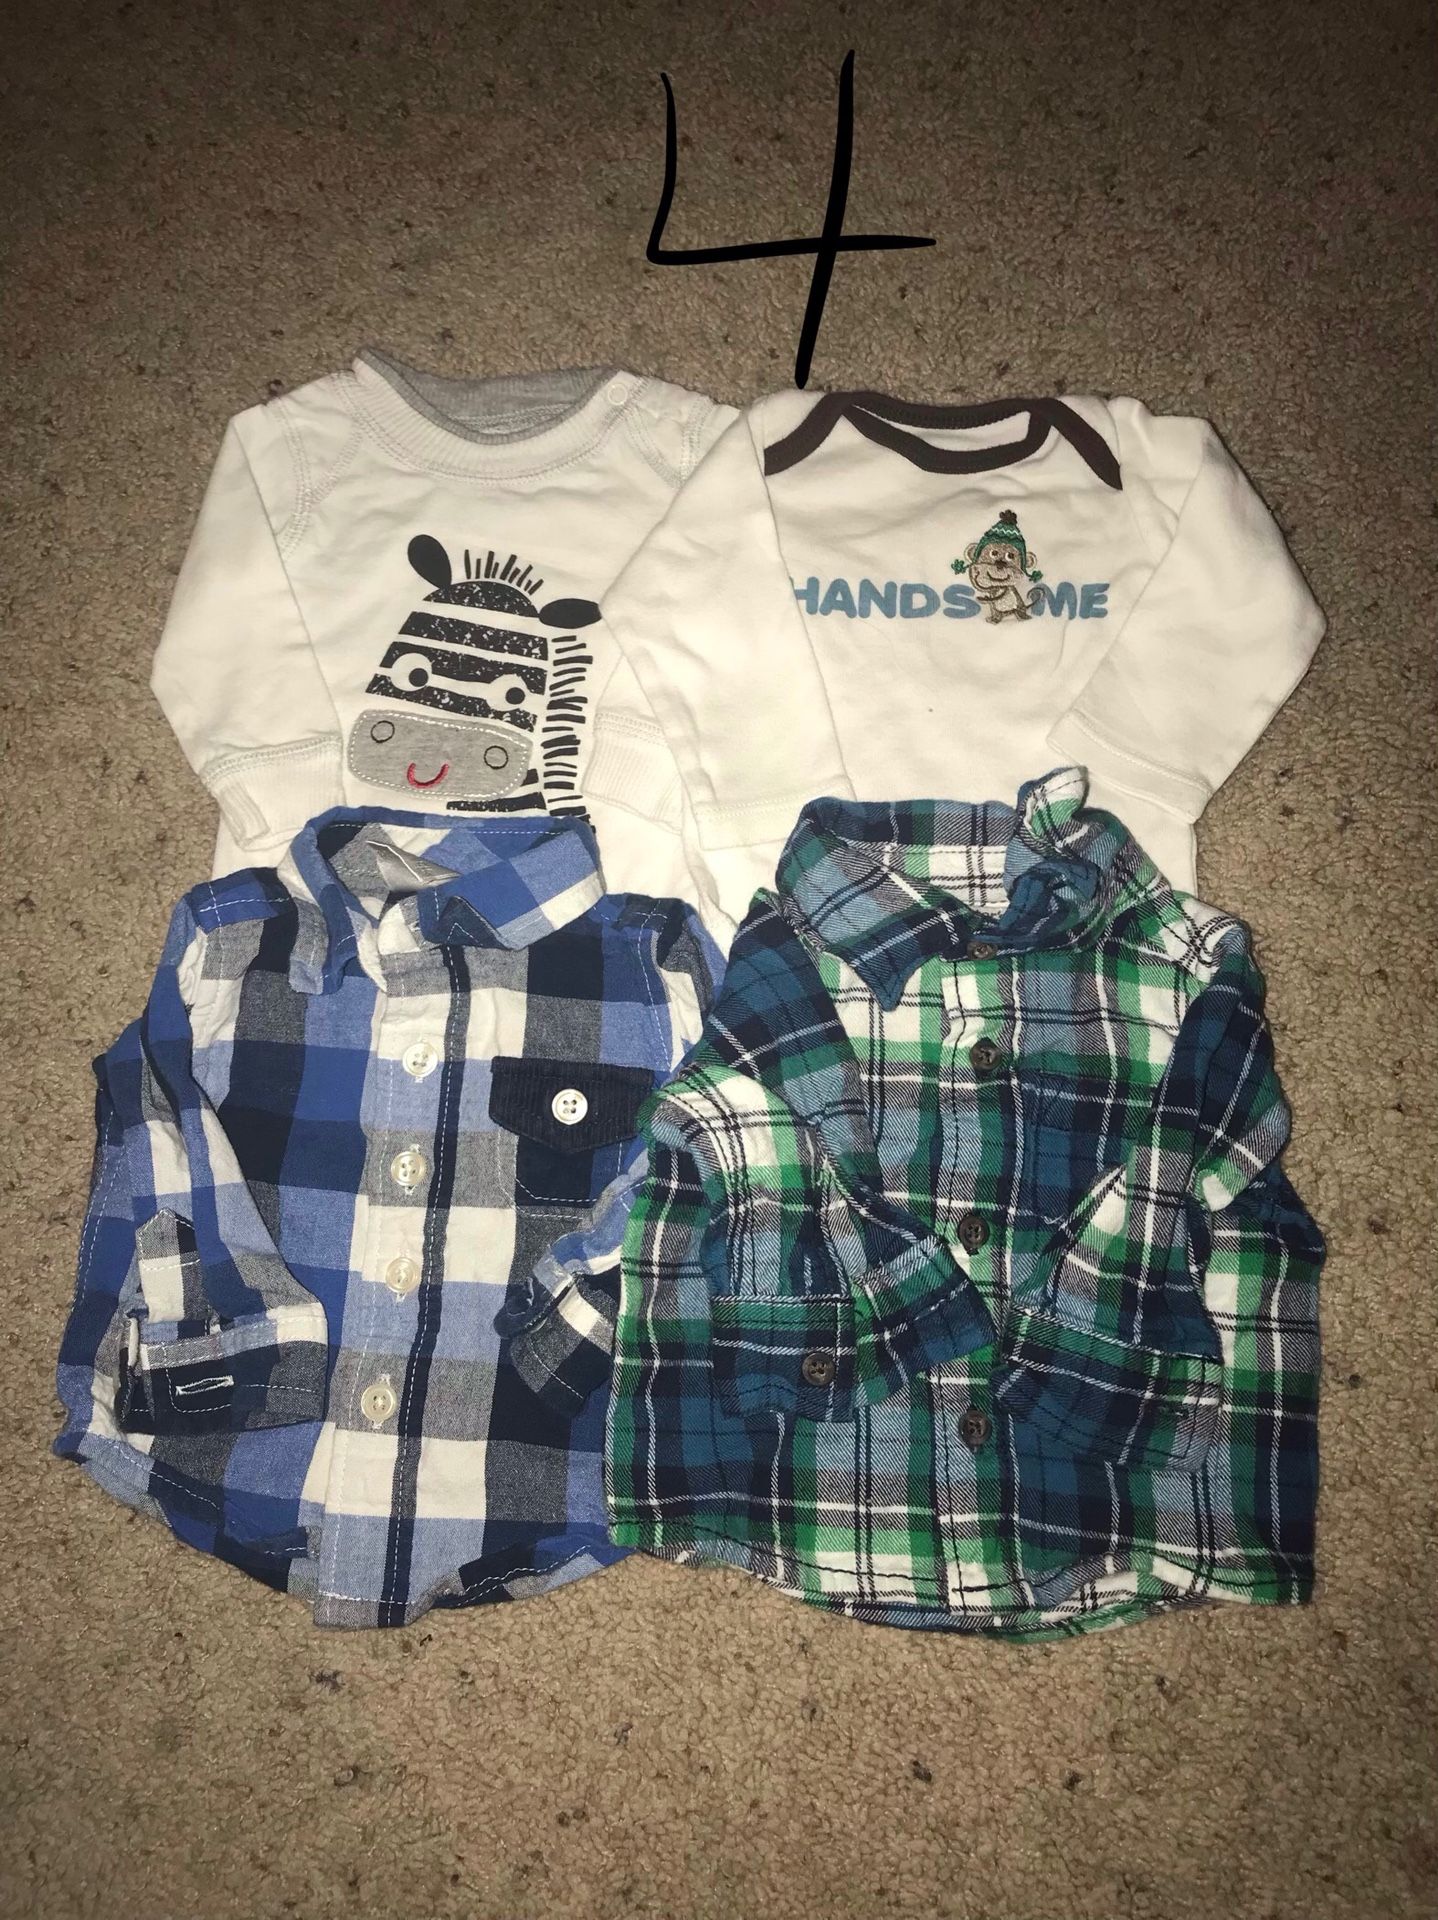 Newborn boys clothes